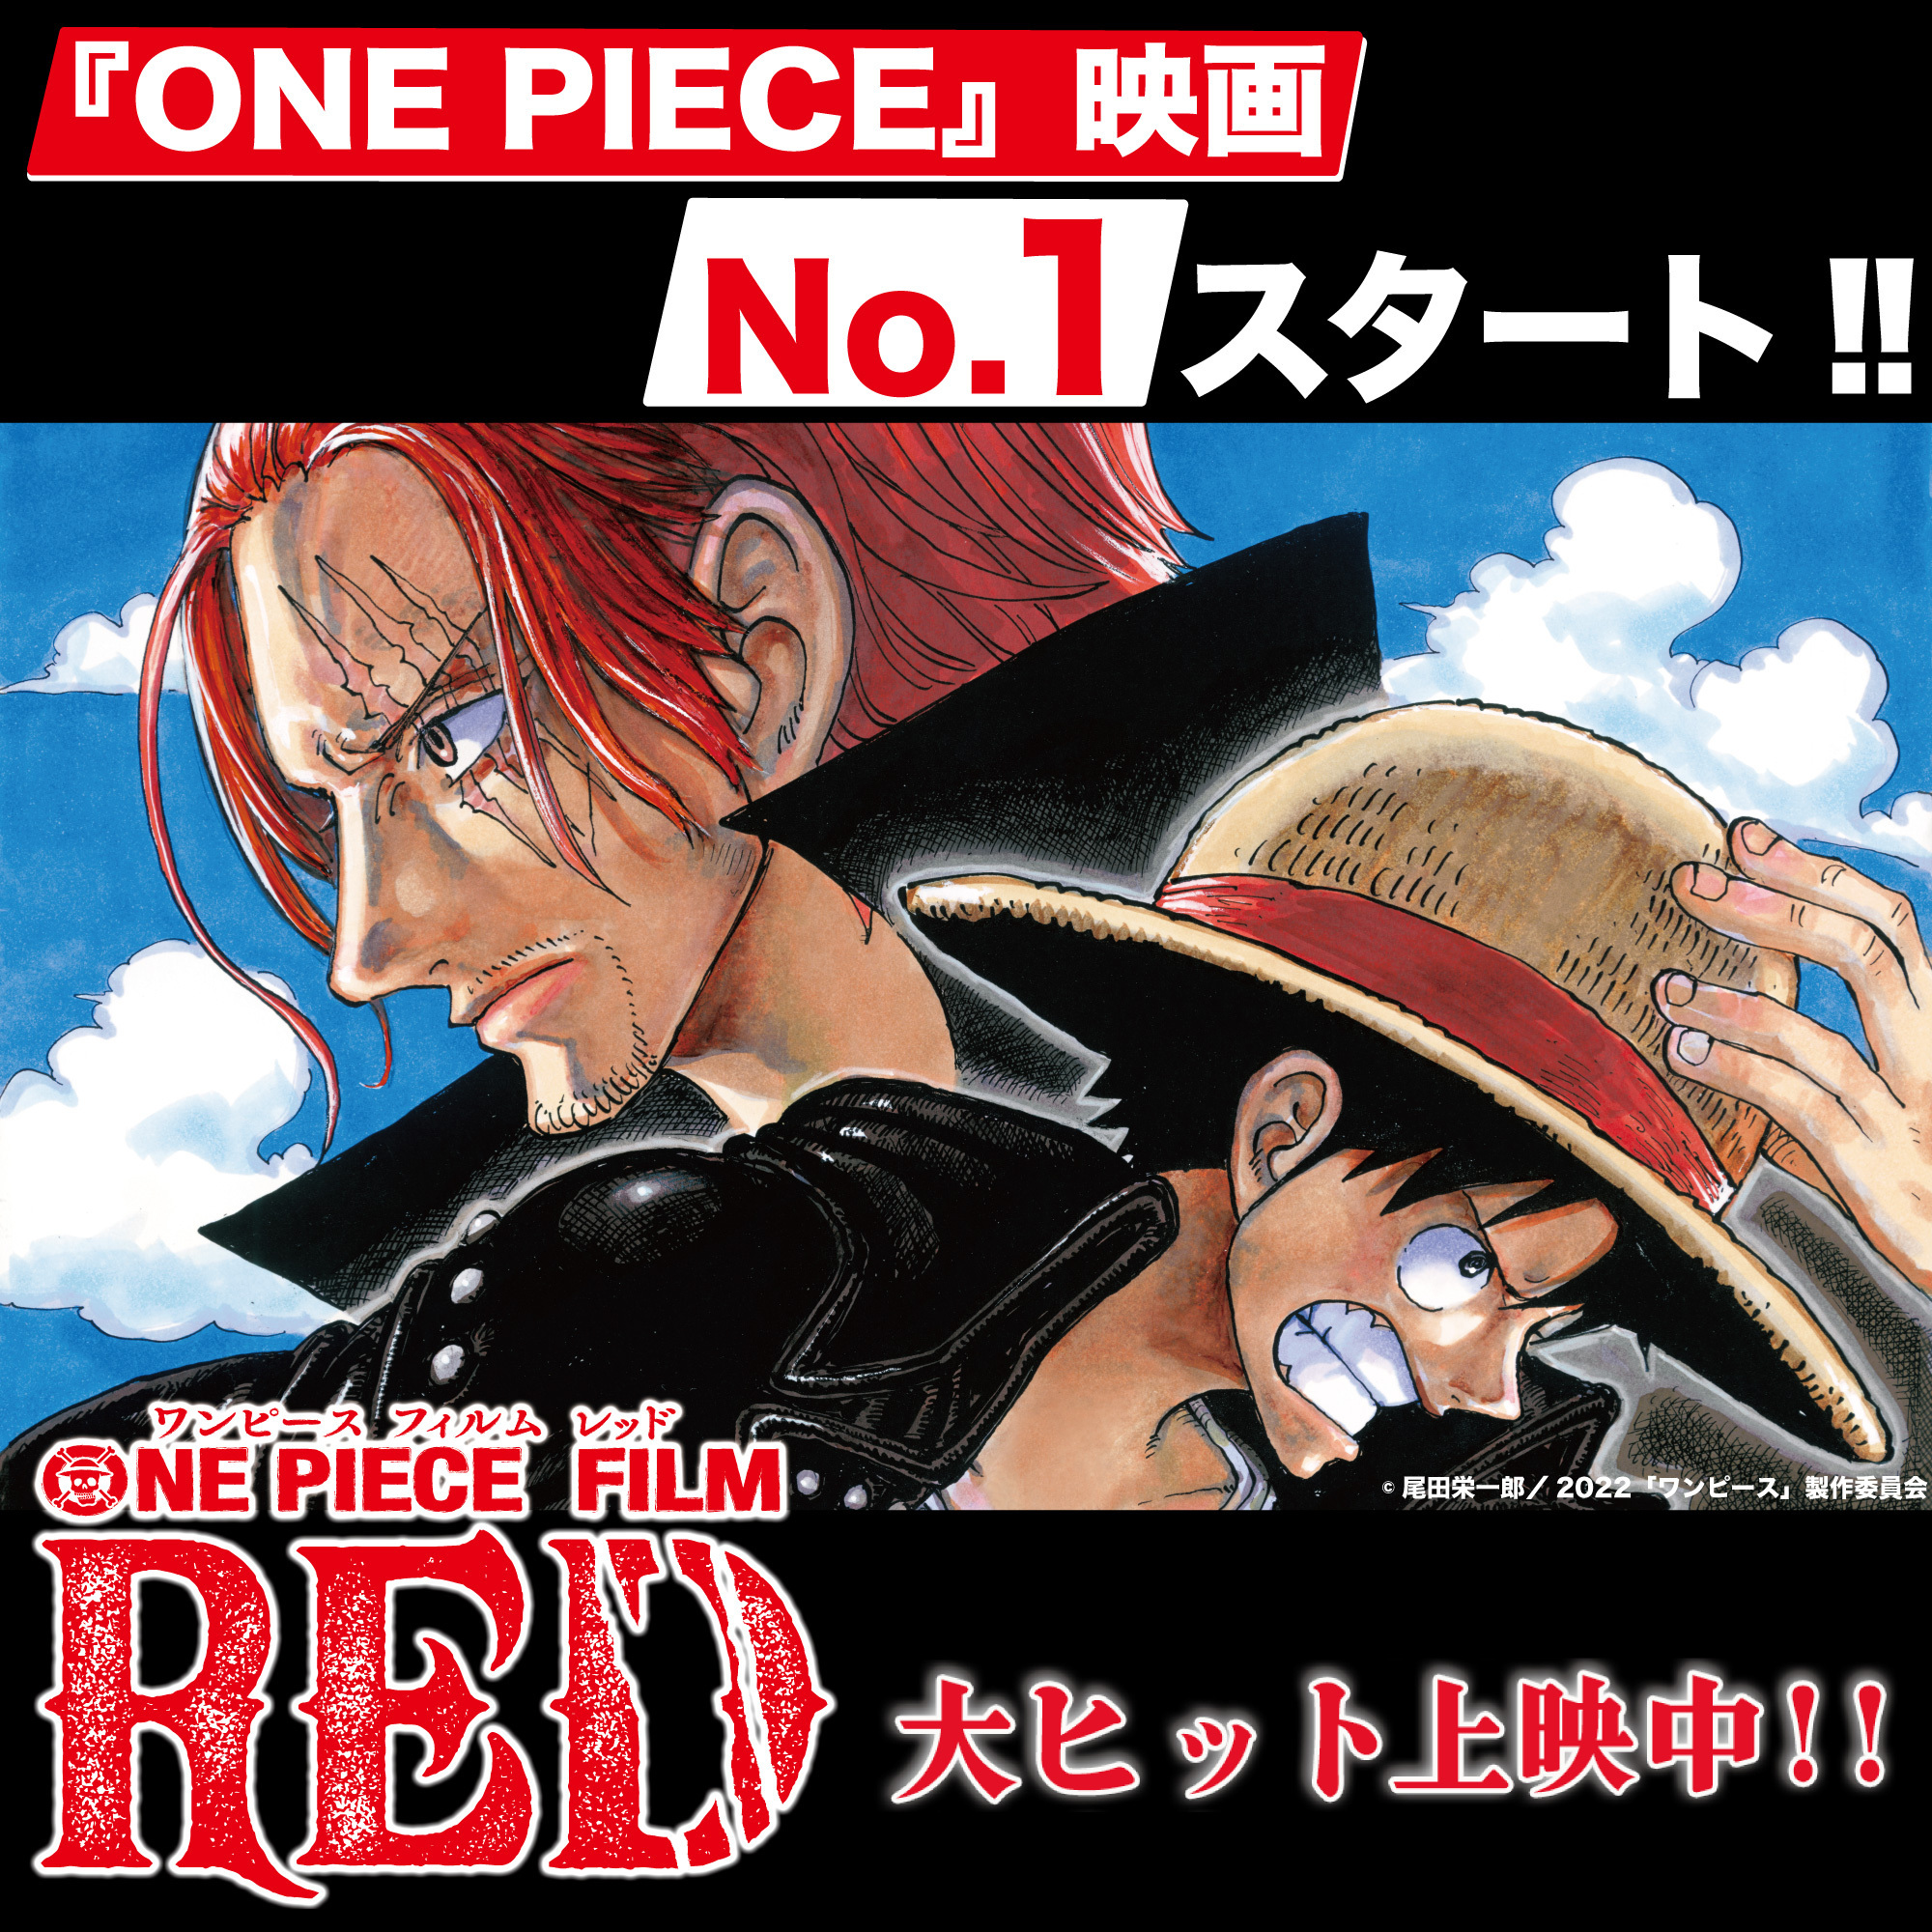 One Piece Film Red が22 5億円突破 アキバ総研